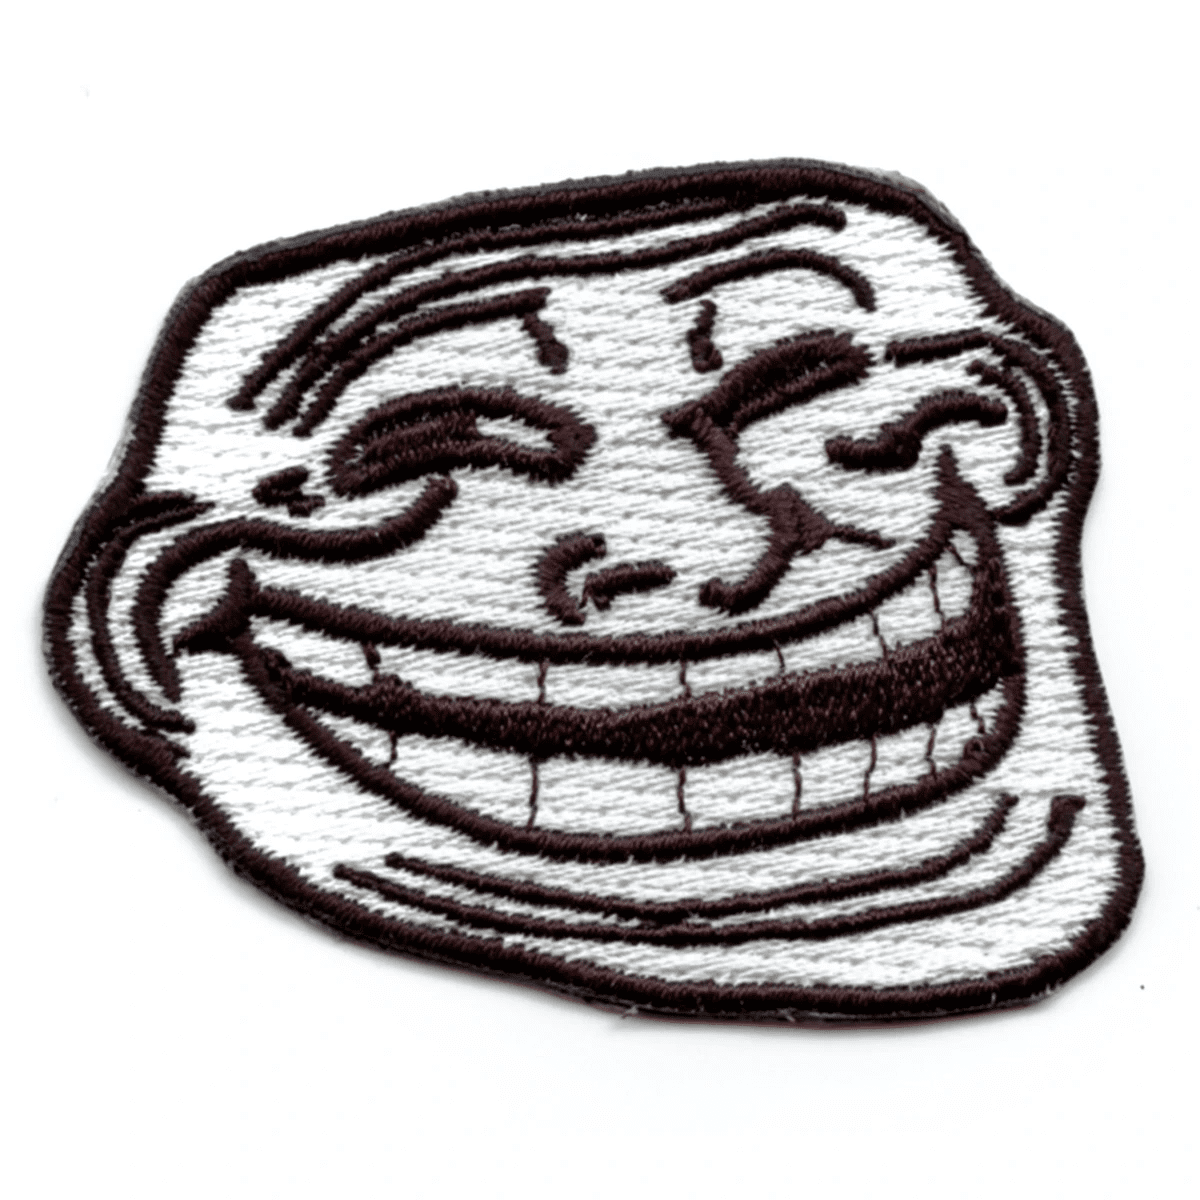 Troll Face Emoji Meme Iron On Embroidered Patch - Walmart.com - Walmart.com